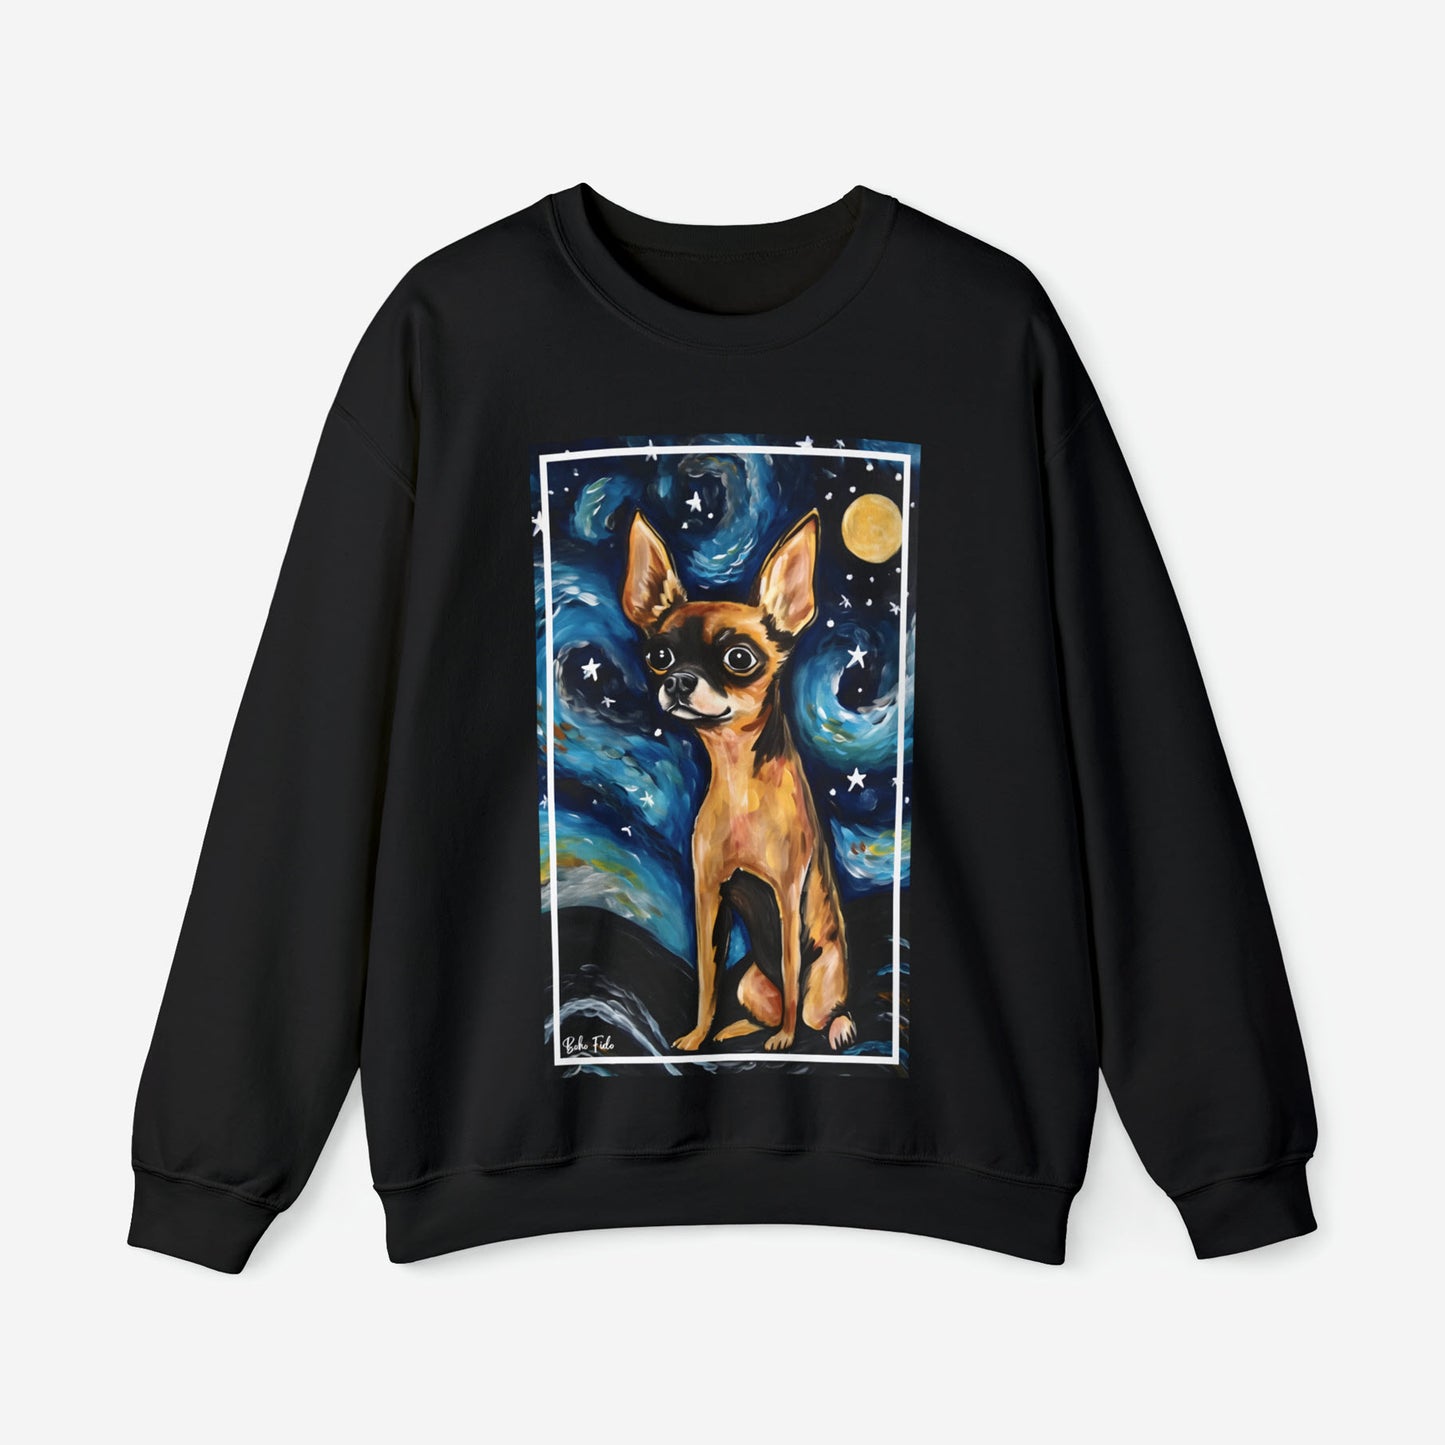 Impasto Moon Sweatshirt